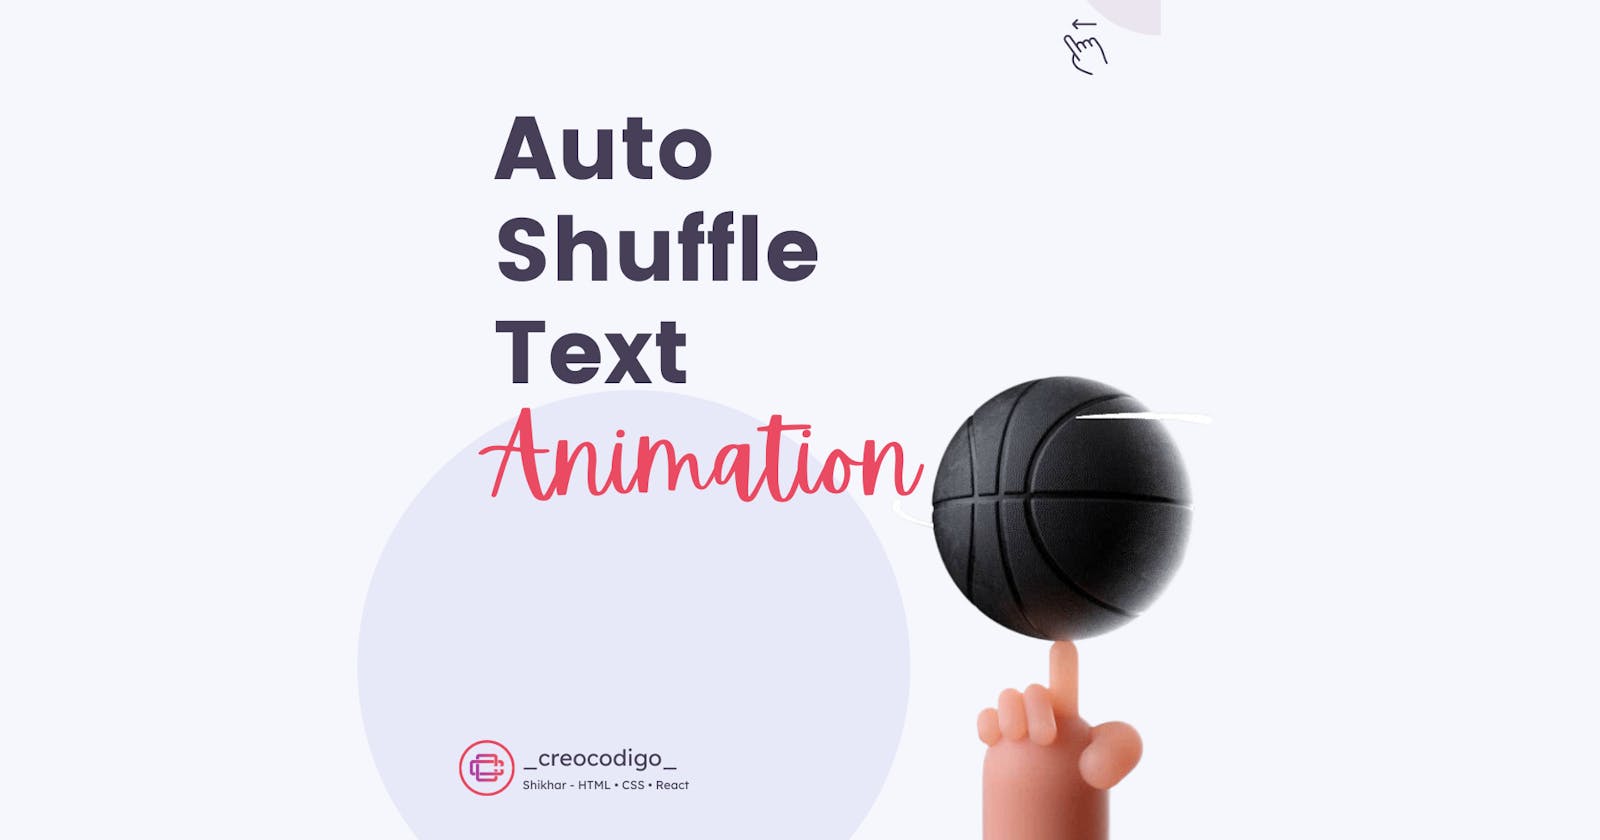 Auto Shuffle Text Animation